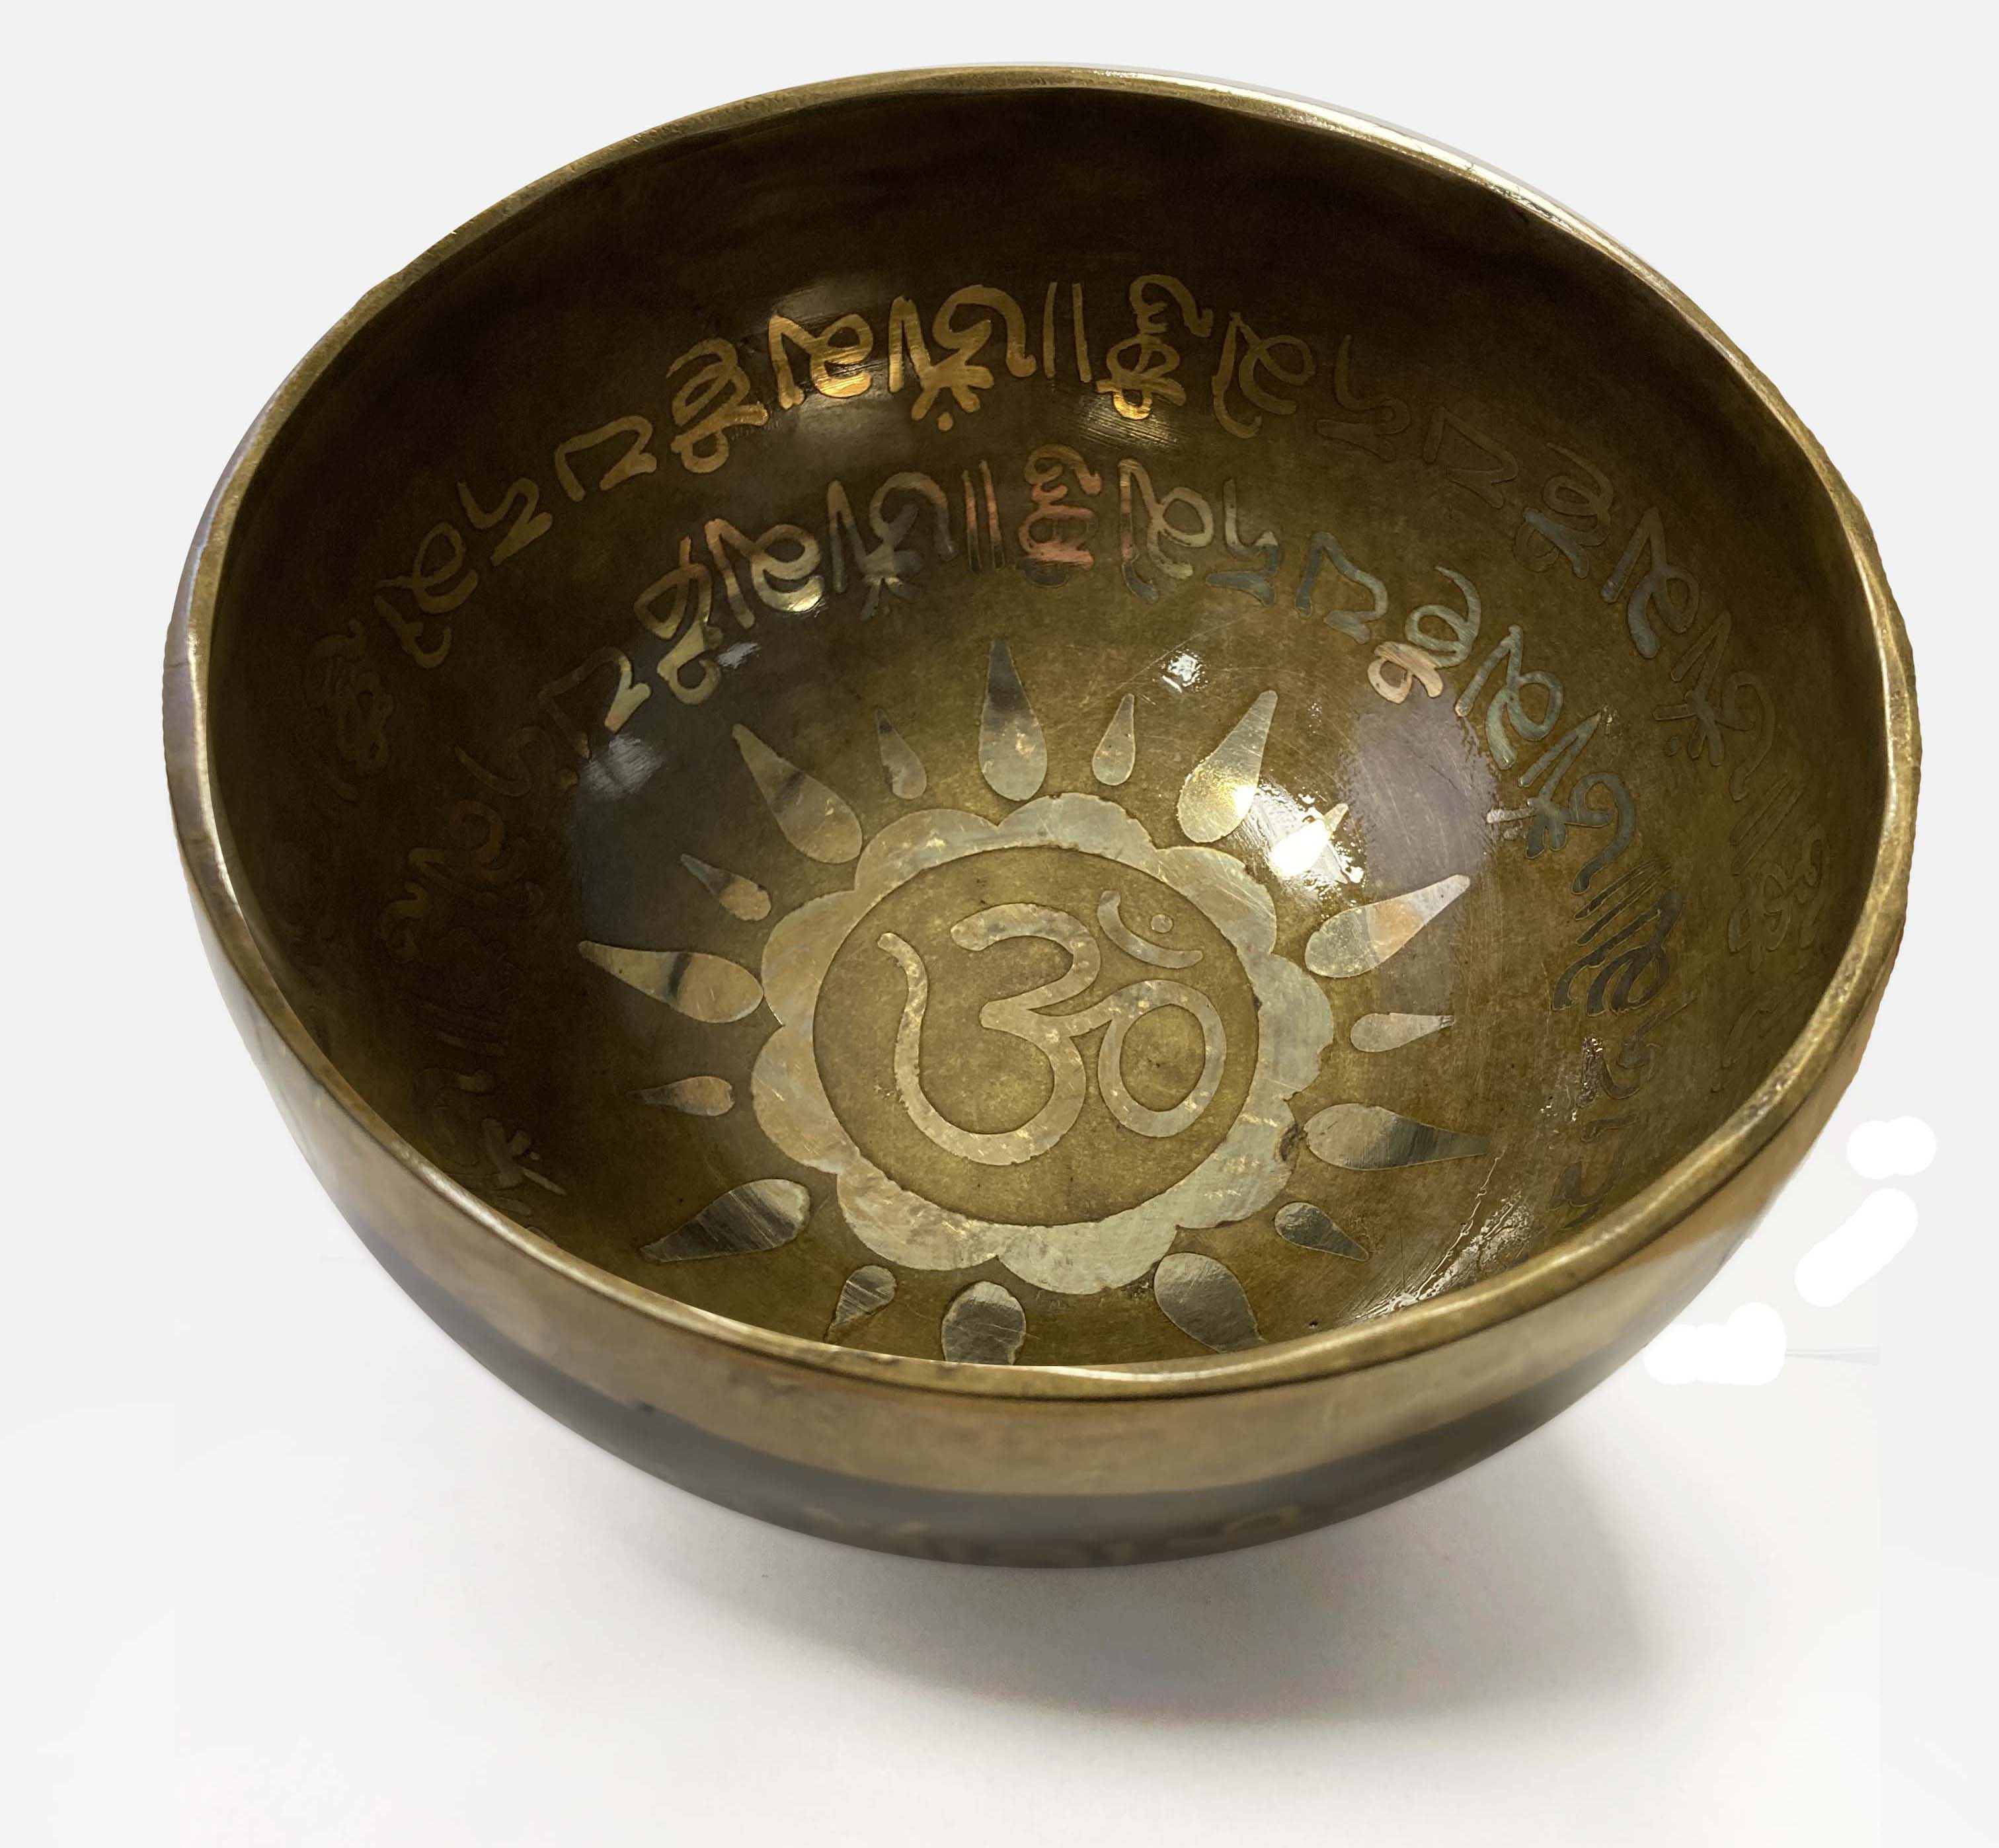 Om Tibetan singing bowl 7 metals with engravings without mesh 14cm